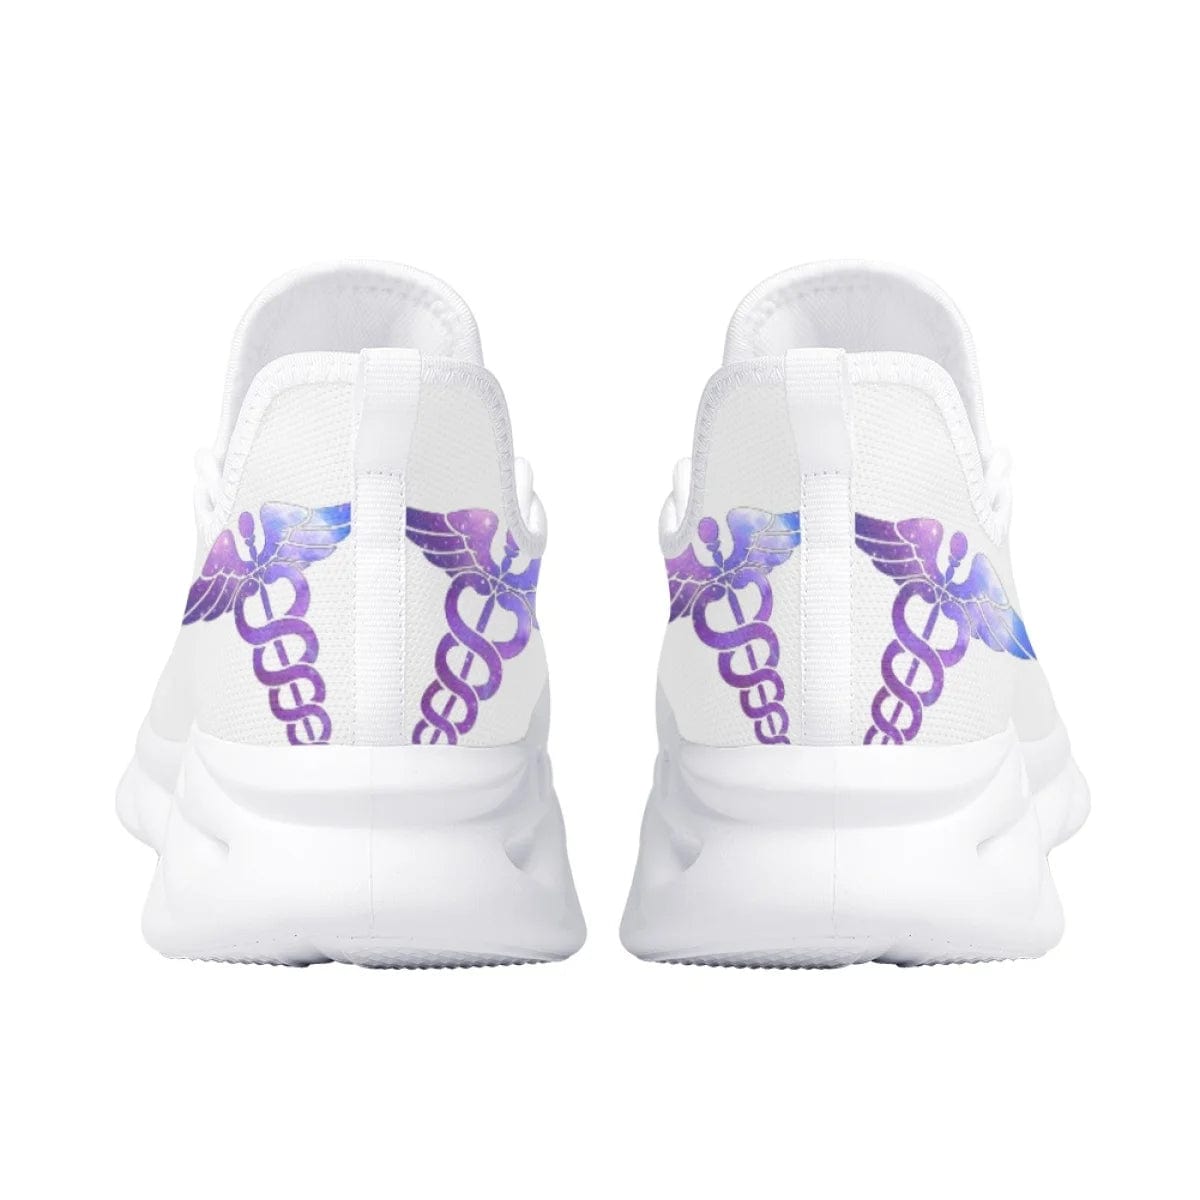 Unisex White Nursing Shoes Cute Cartoon Nurse Doctor Healthcare Brand Design Ladies Mesh Flats Sneakers